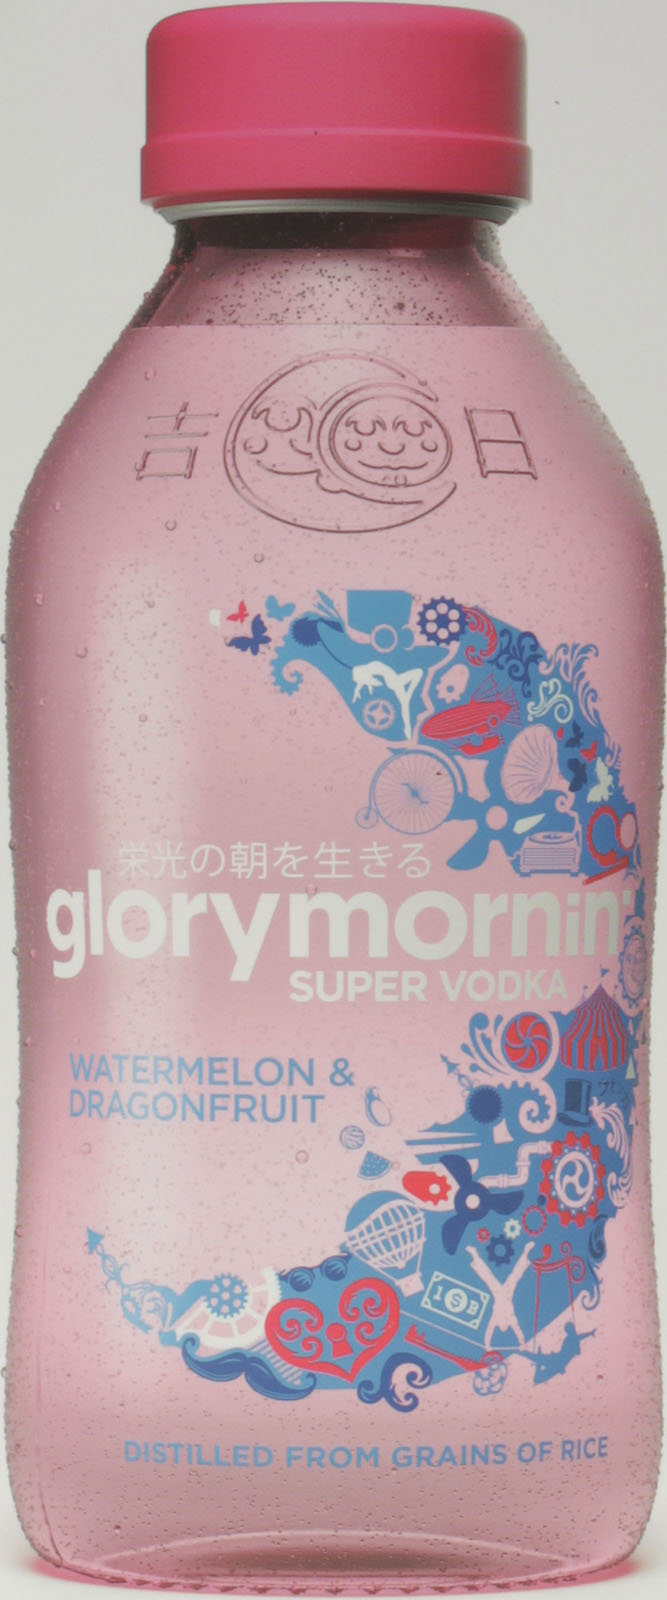 Glory Mornin Super Vodka - Watermelone & Dragonfruit im